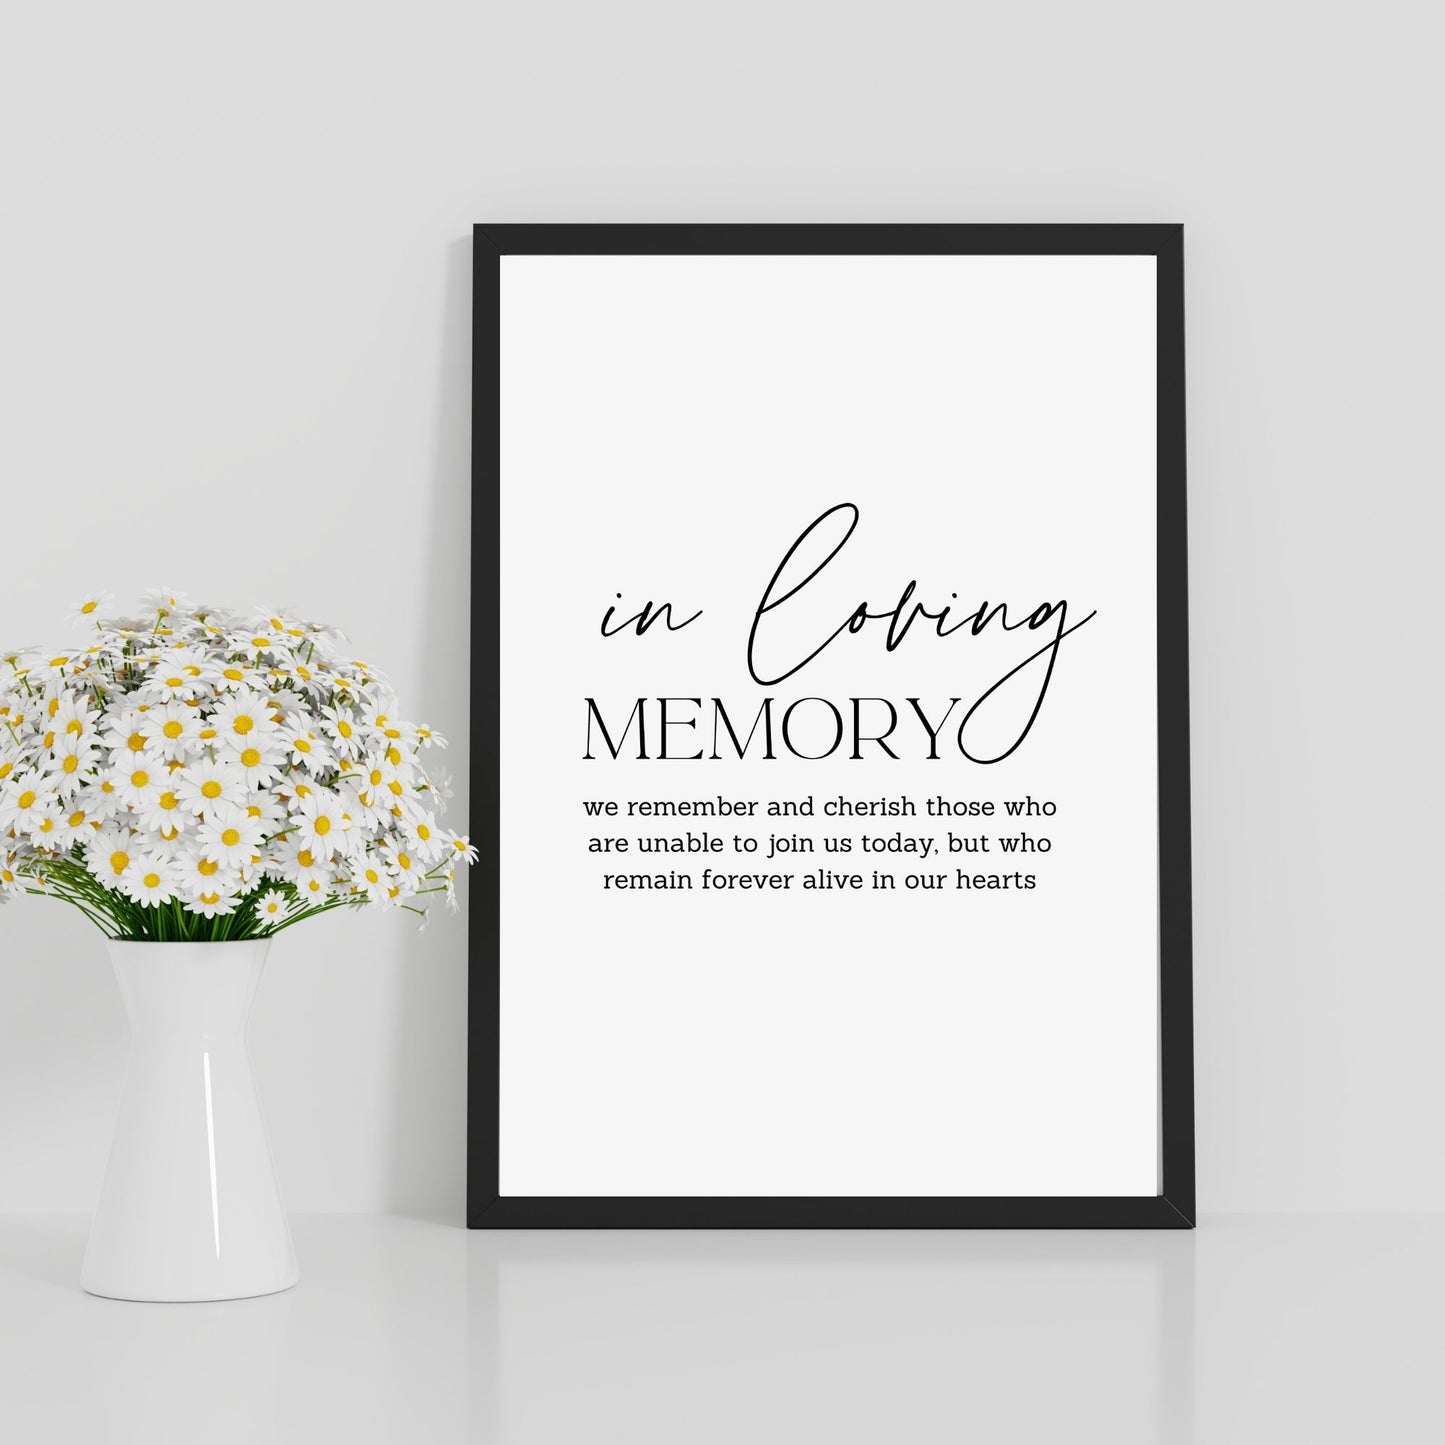 In Loving Memory Sign Printable - Minimalist